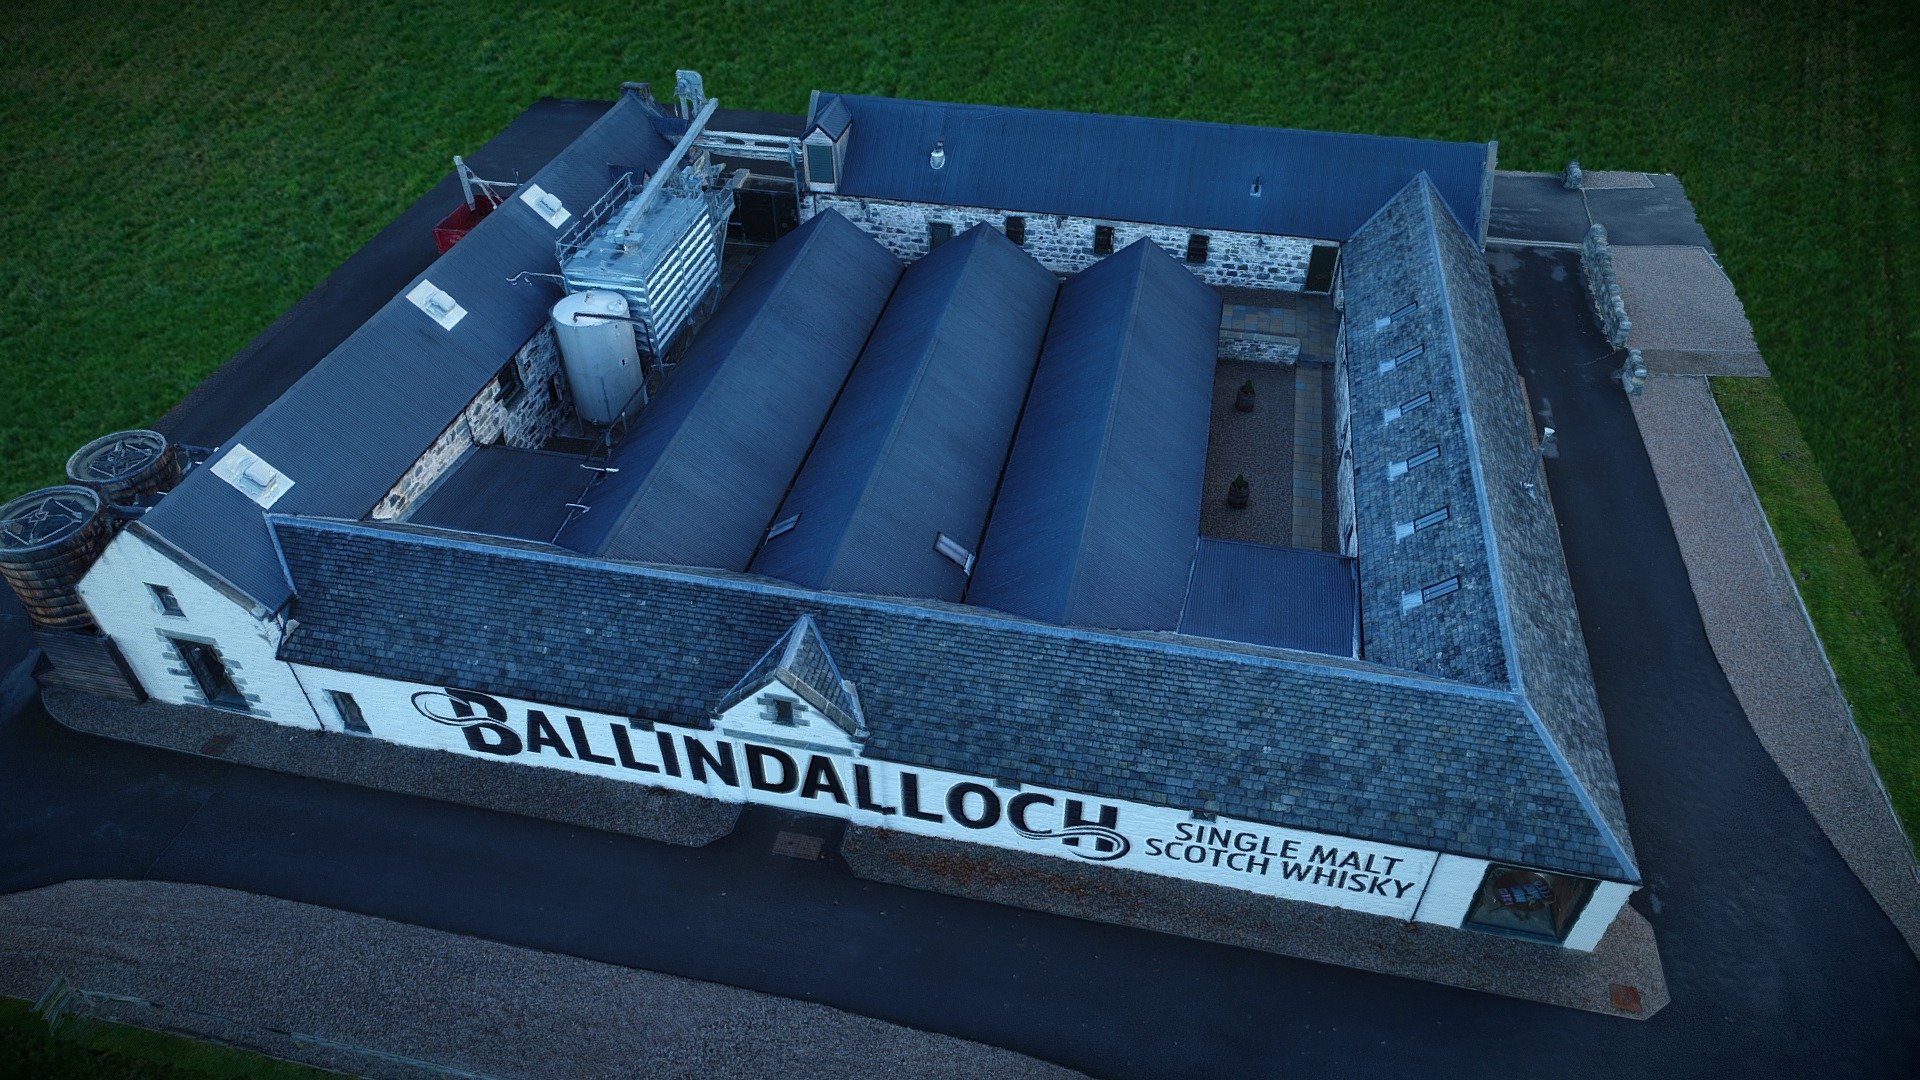 Ballindalloch Distillery Speyside Scotland 3D Model.

Created by 3DUK commercial Photogrammetry 3d model